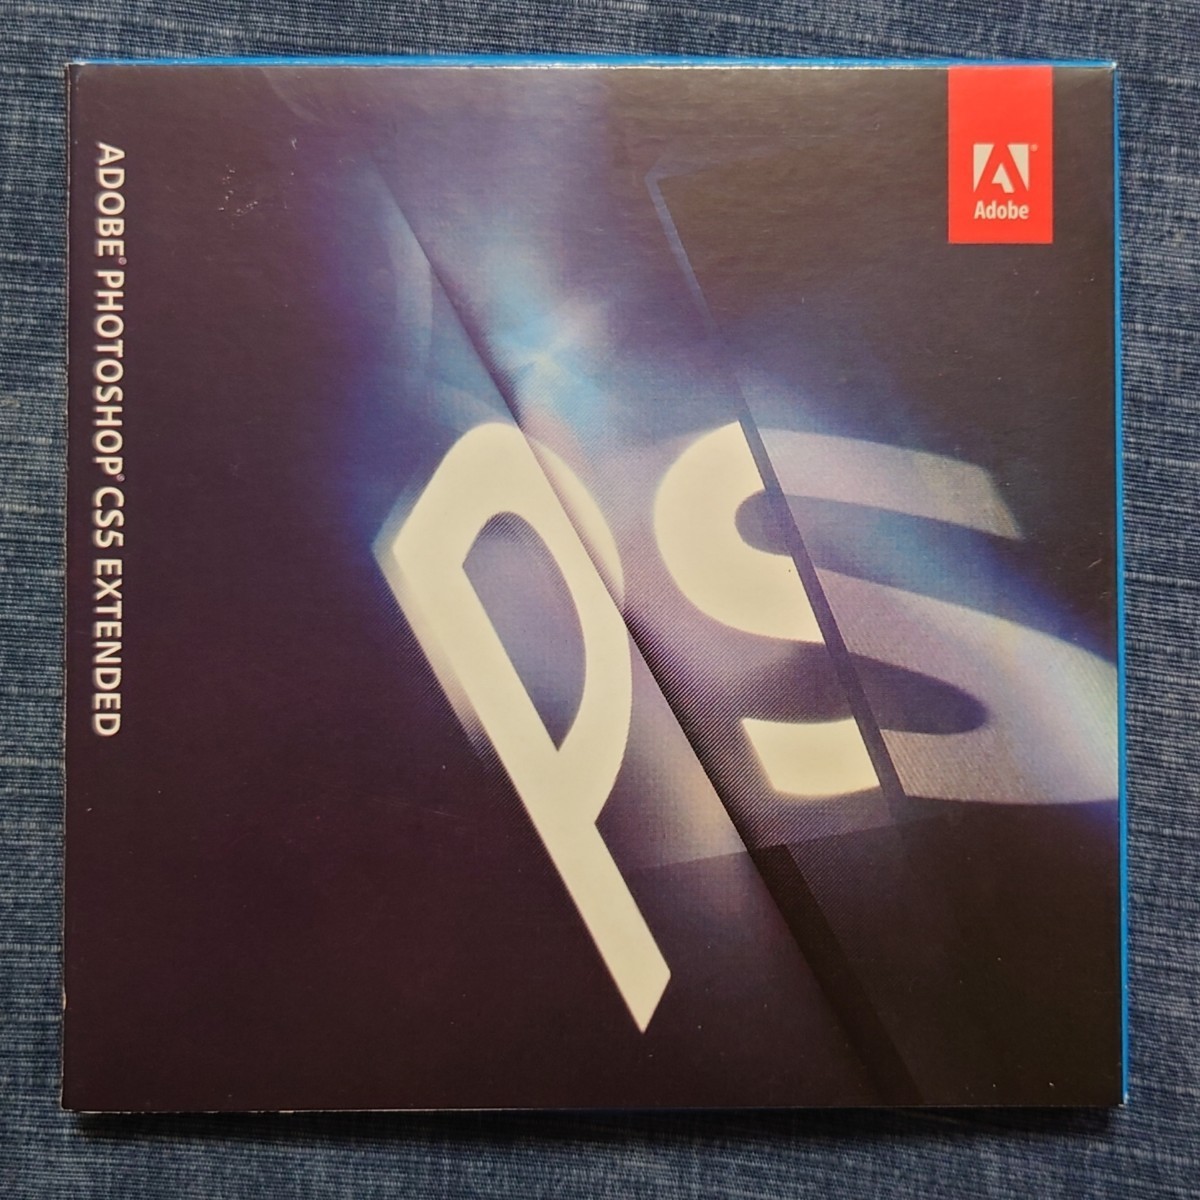 Adobe Photoshop CS5 Extended Windows 日本語版 学生版-